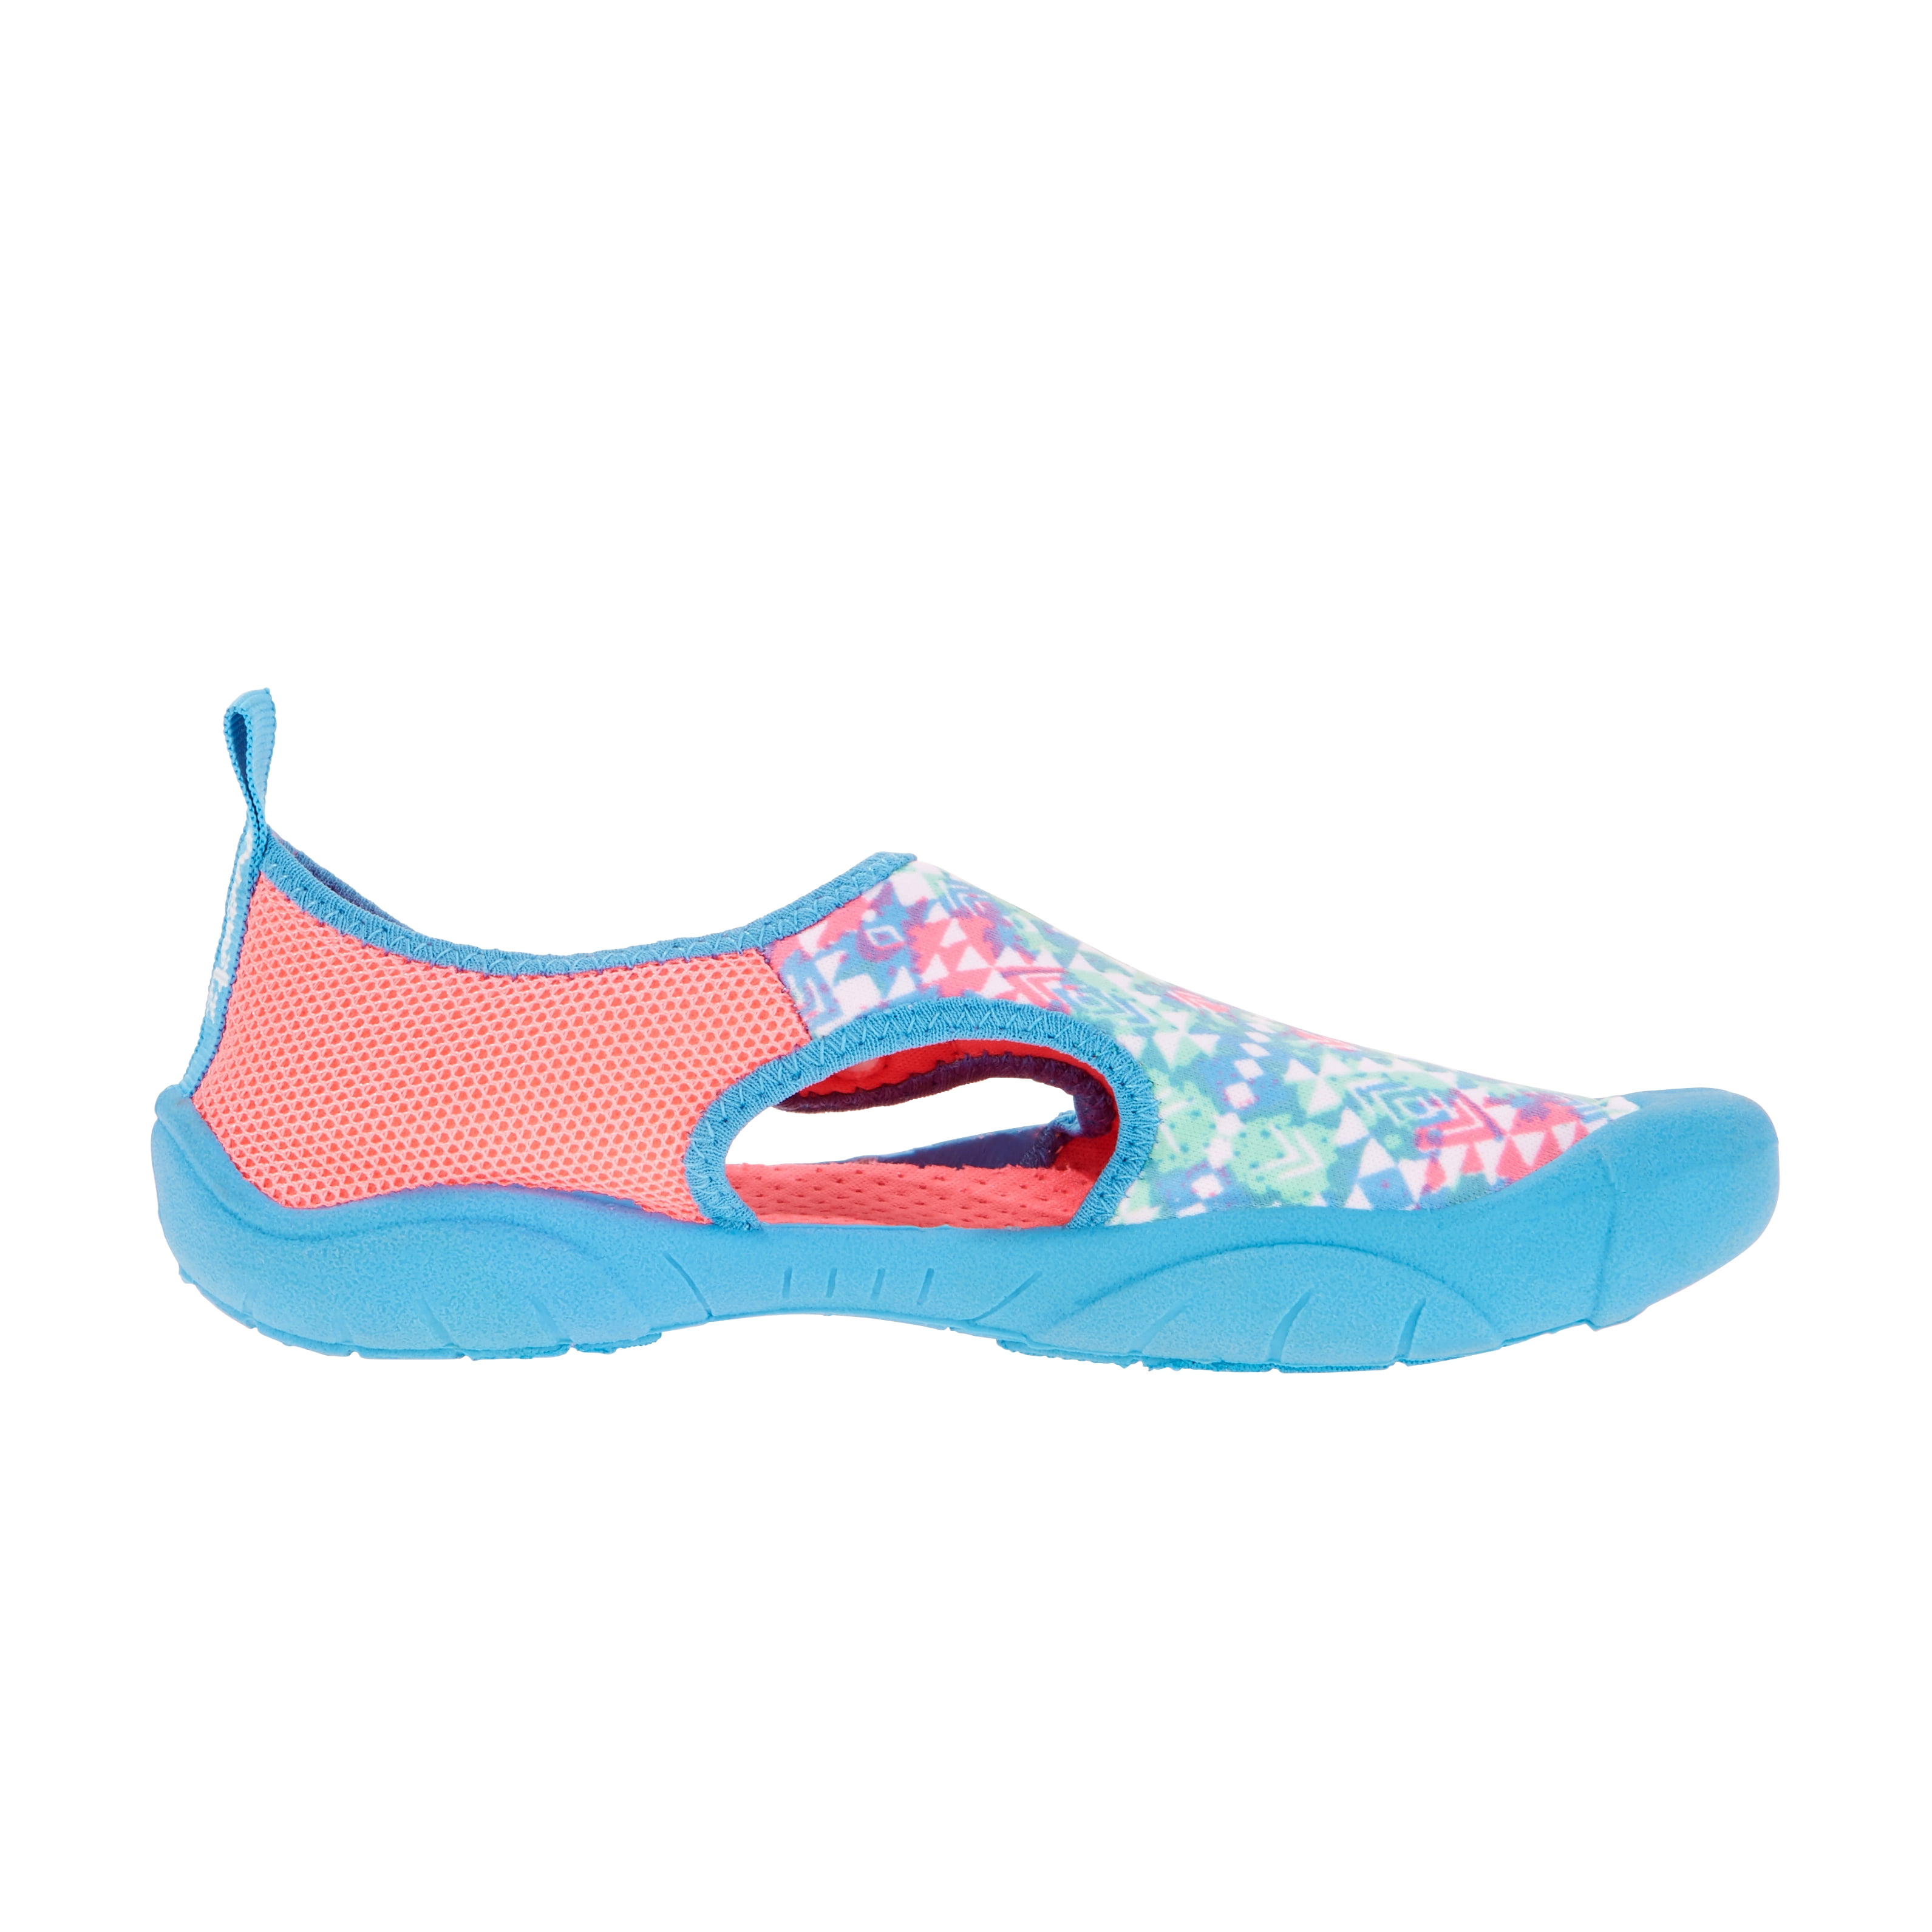 Newtz - Newtz Girls' Water Shoe 